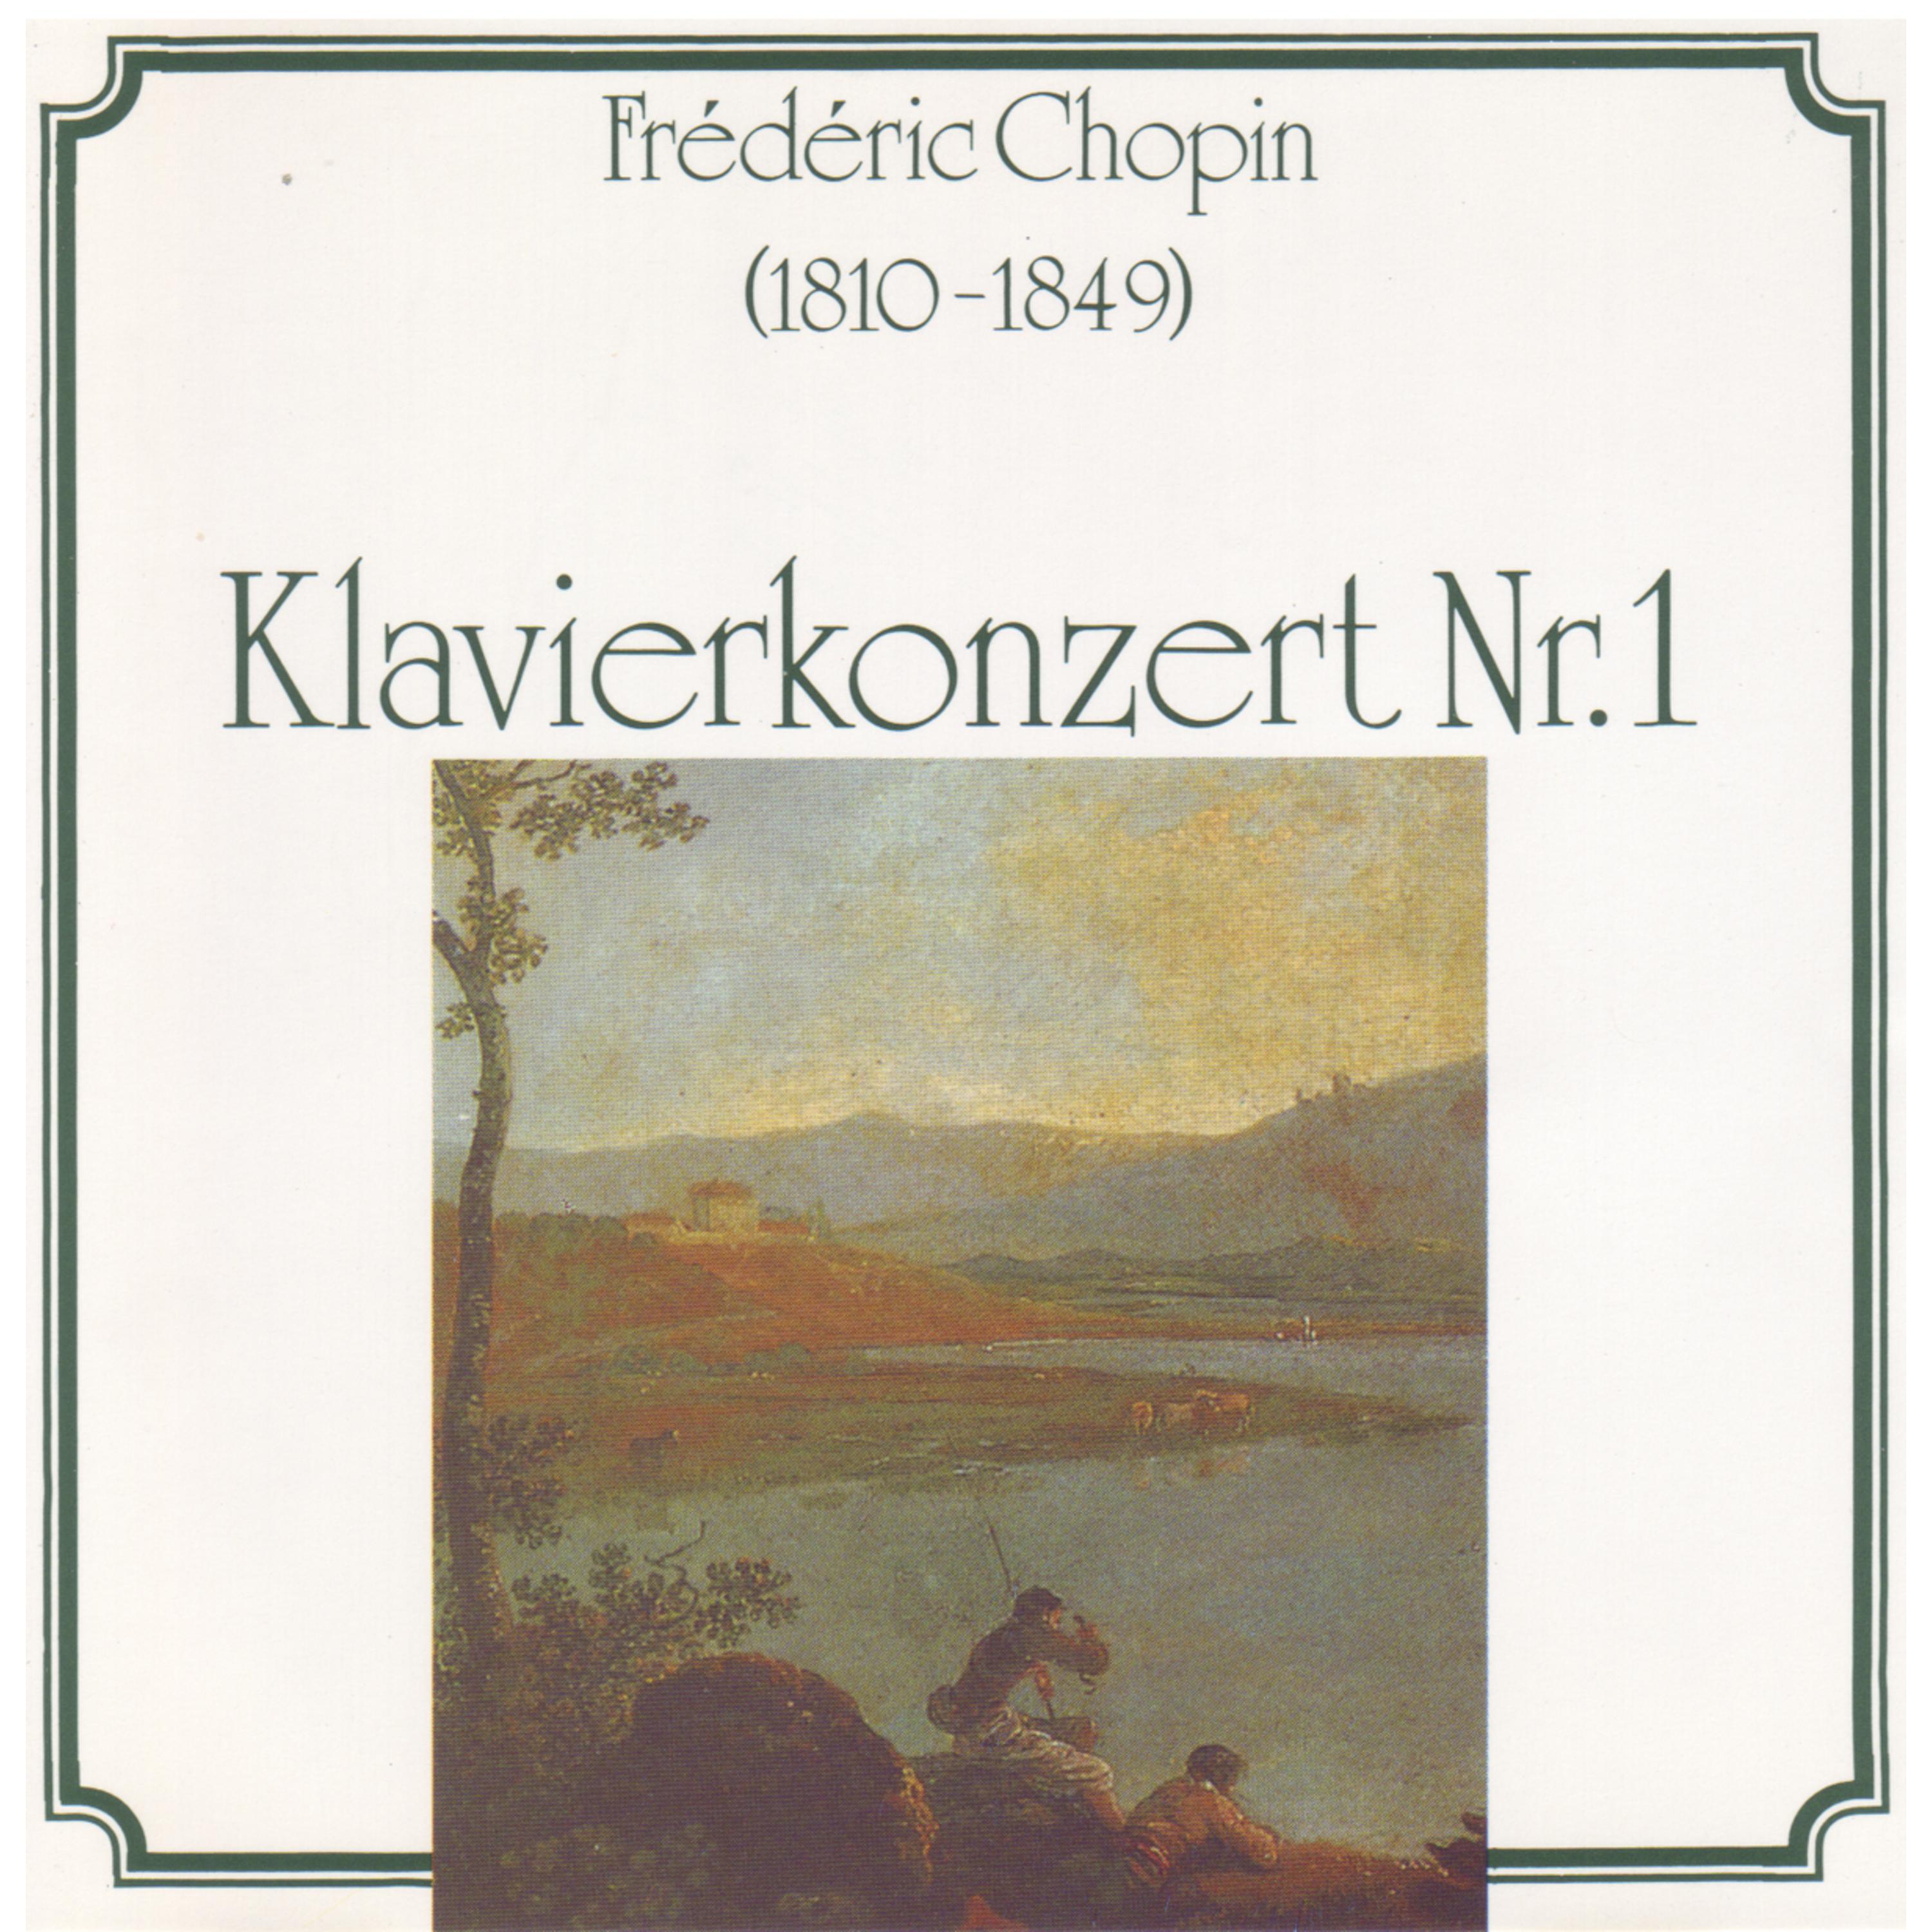 Pre lude fü r Klavier in F Minor, Op. 28, No. 19